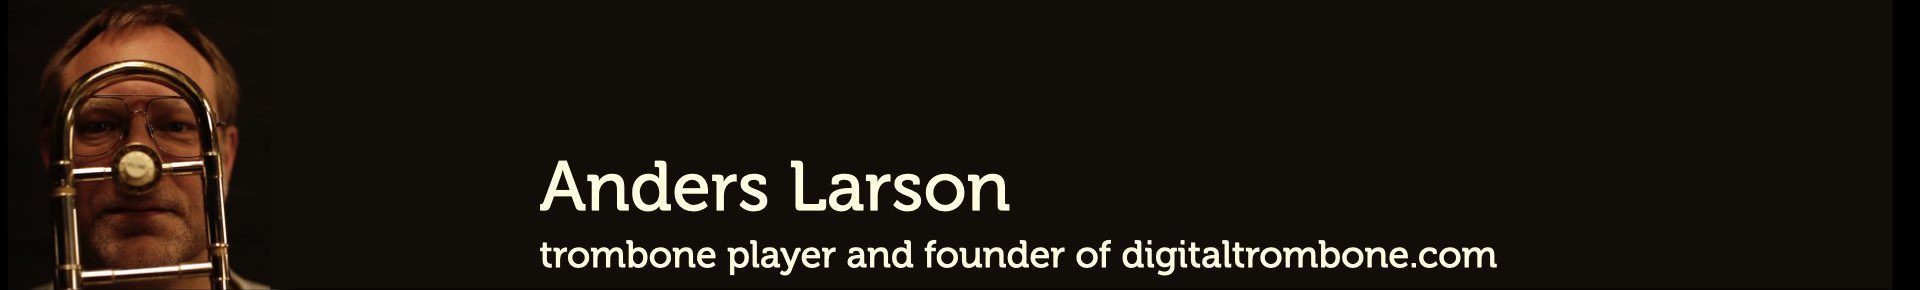 Anders Larson - trombone player and founder of digitaltrombone.com